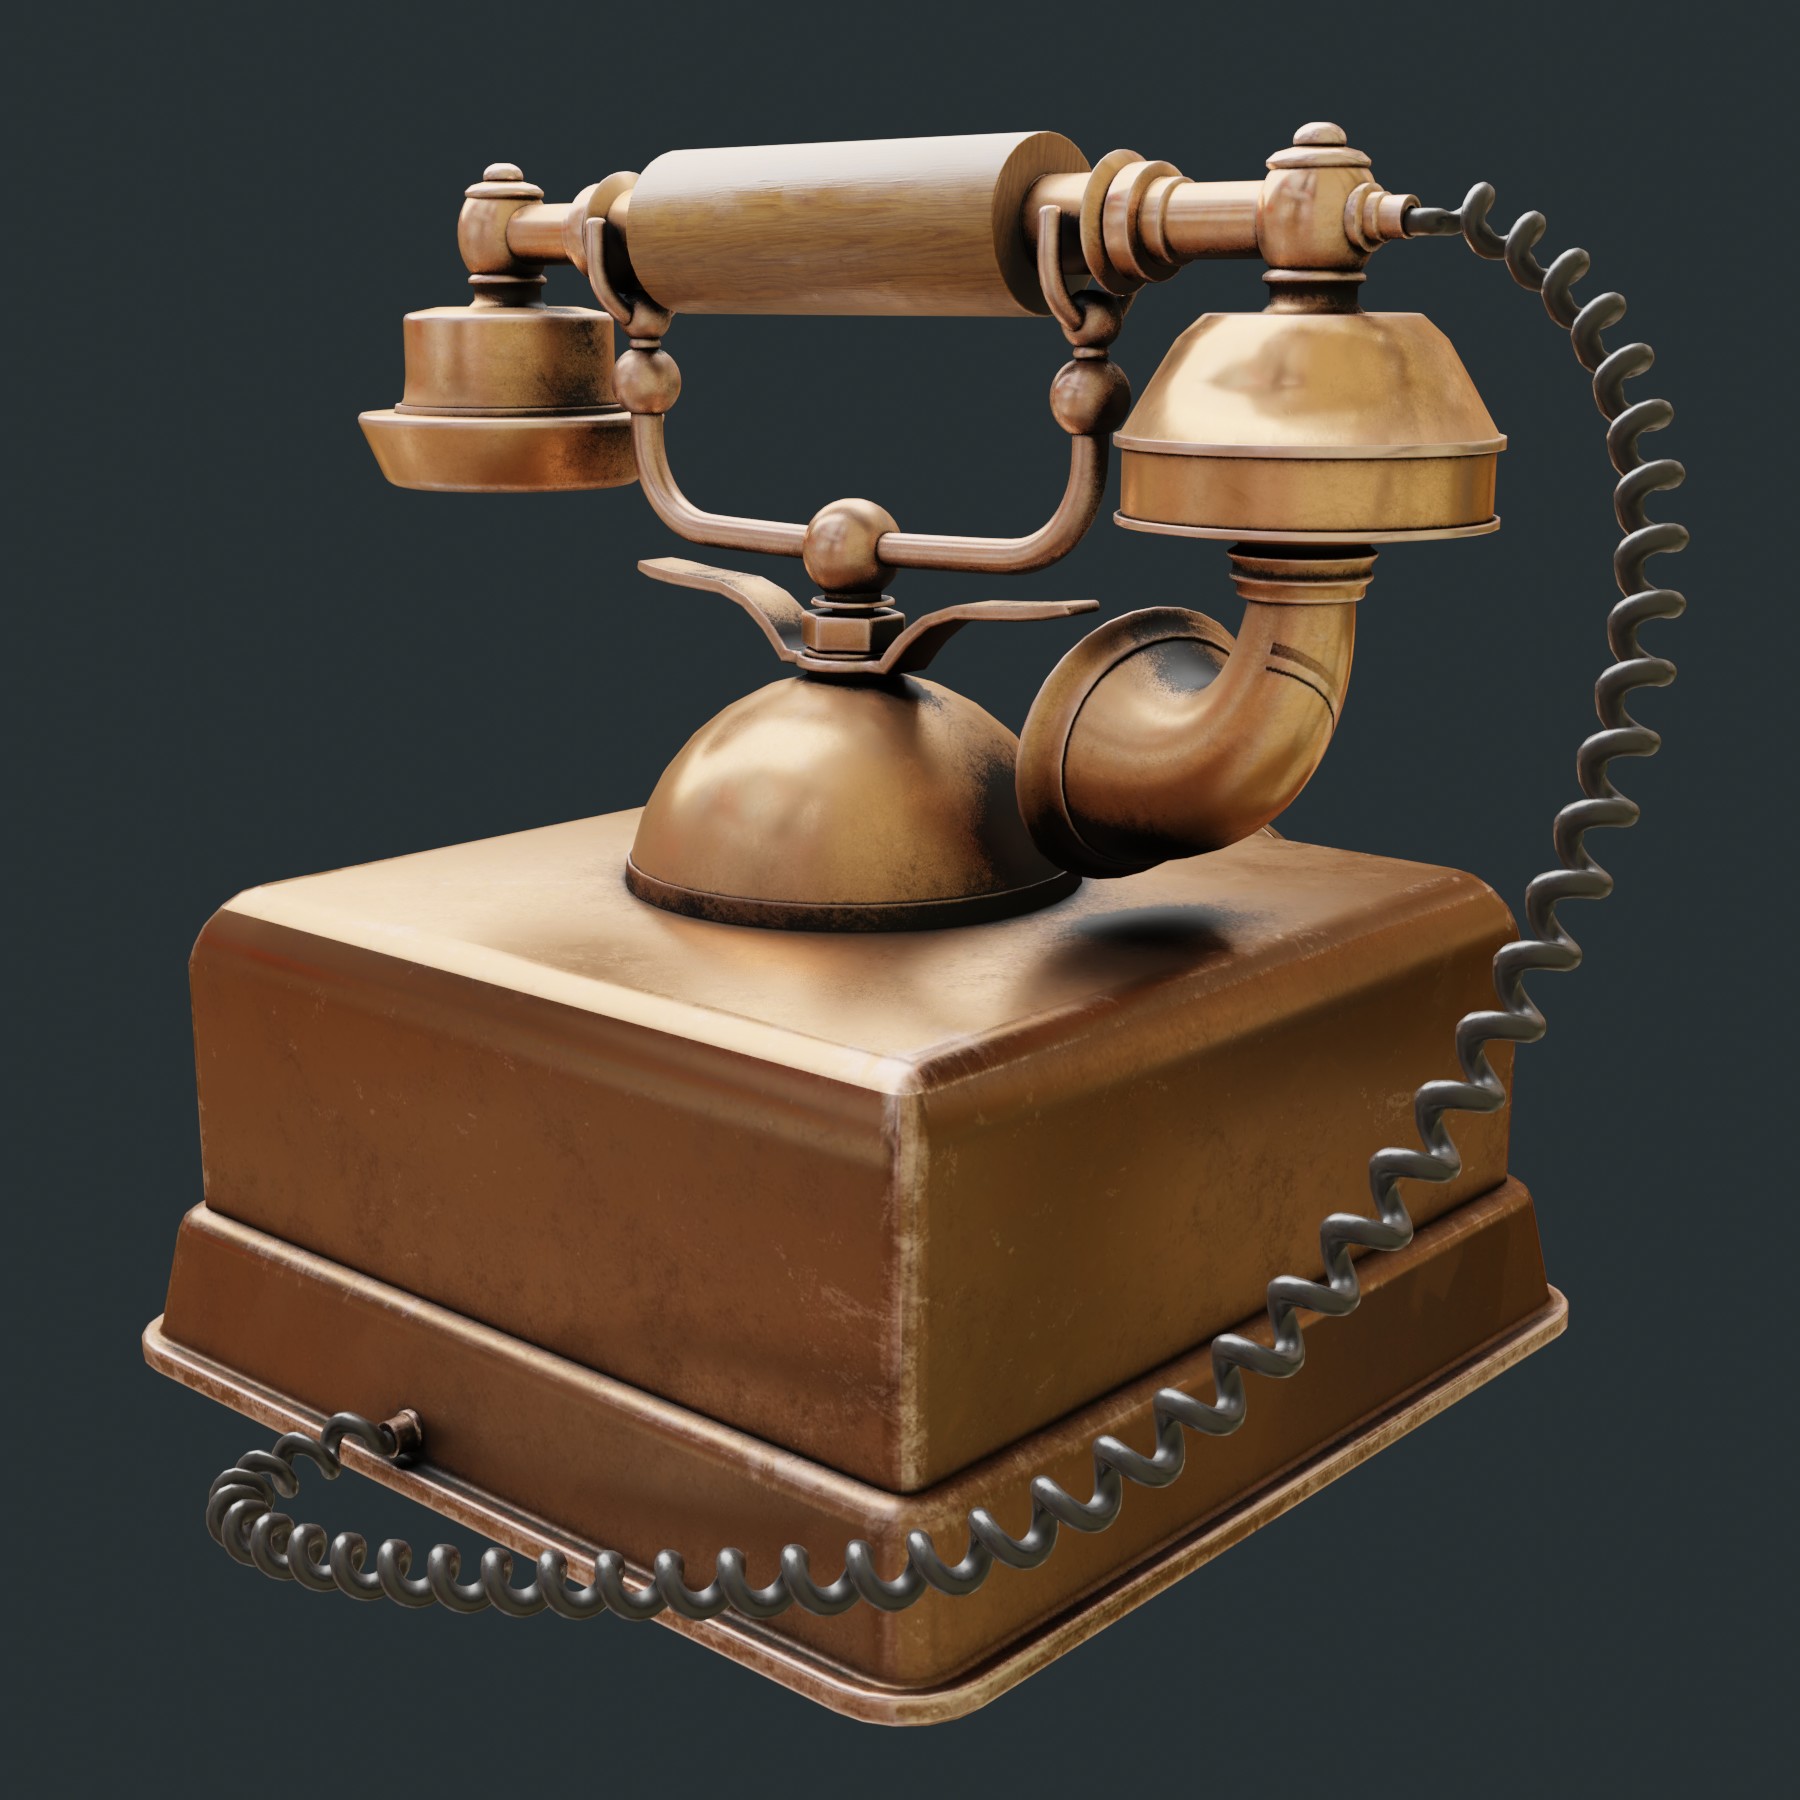 Telefono vintage in Blender cycles render immagine